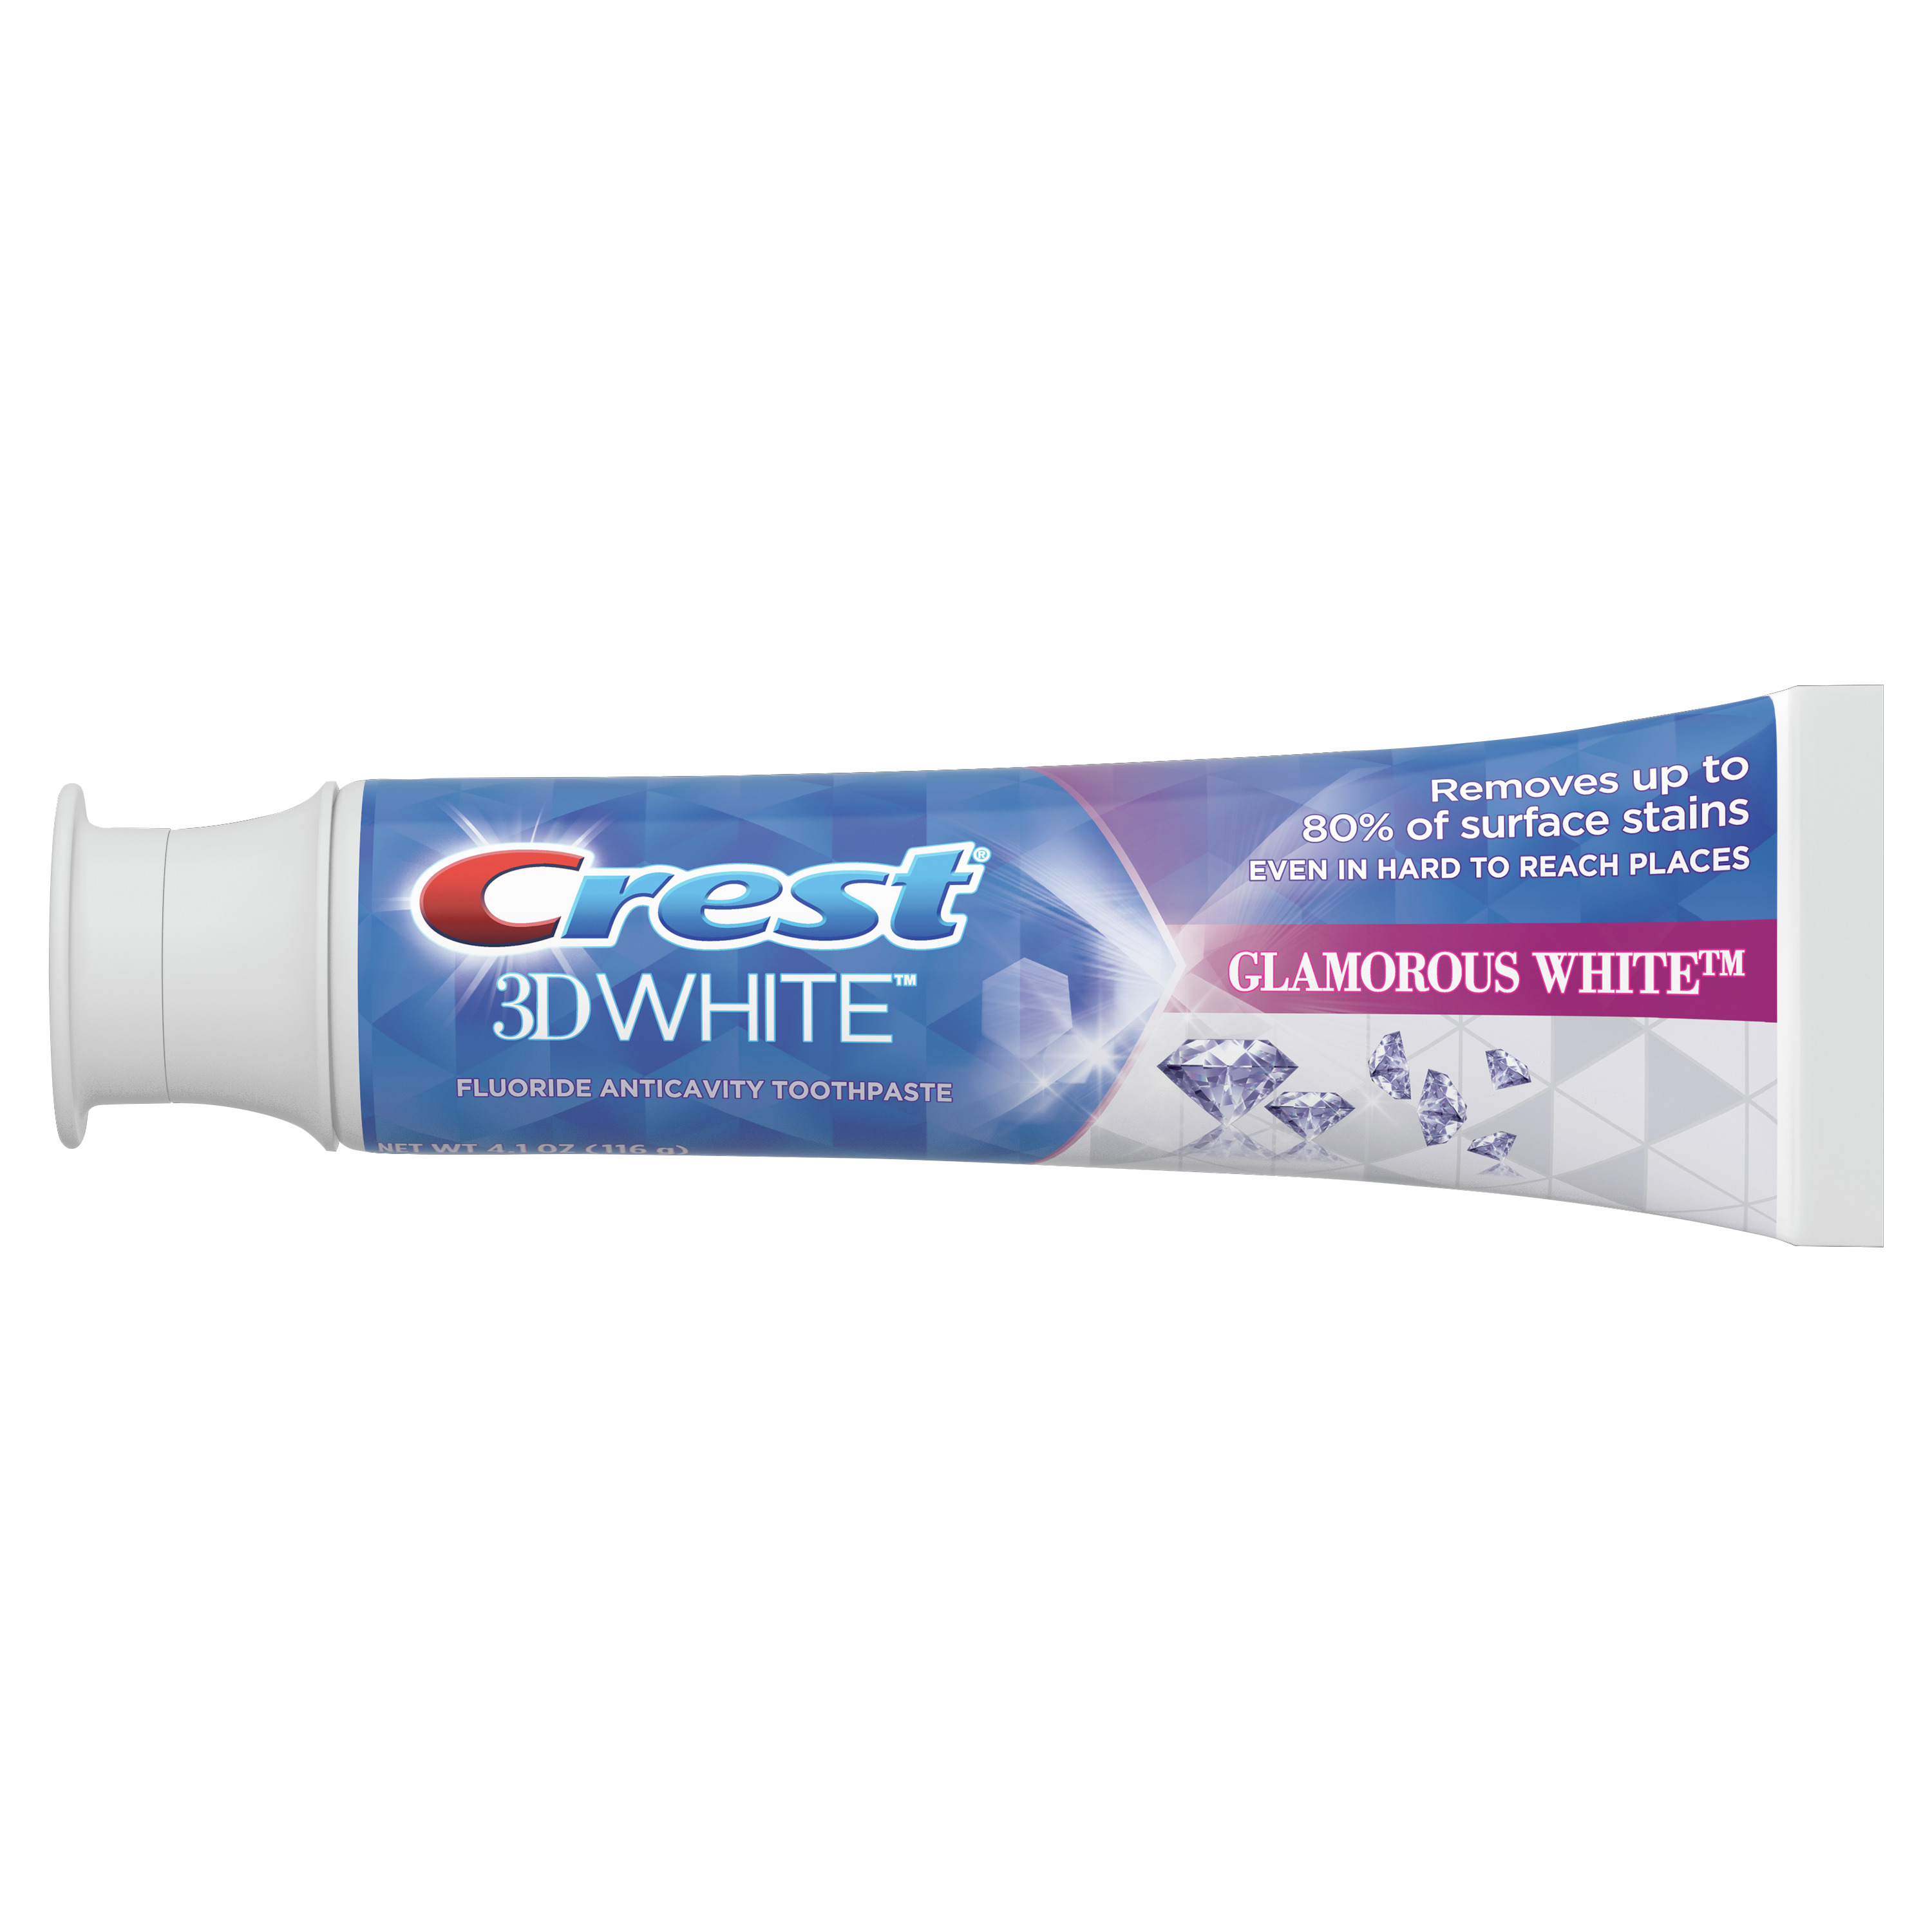 Crest 3D White, Whitening Toothpaste Glamorous White, 4.1 oz - image 3 of 5